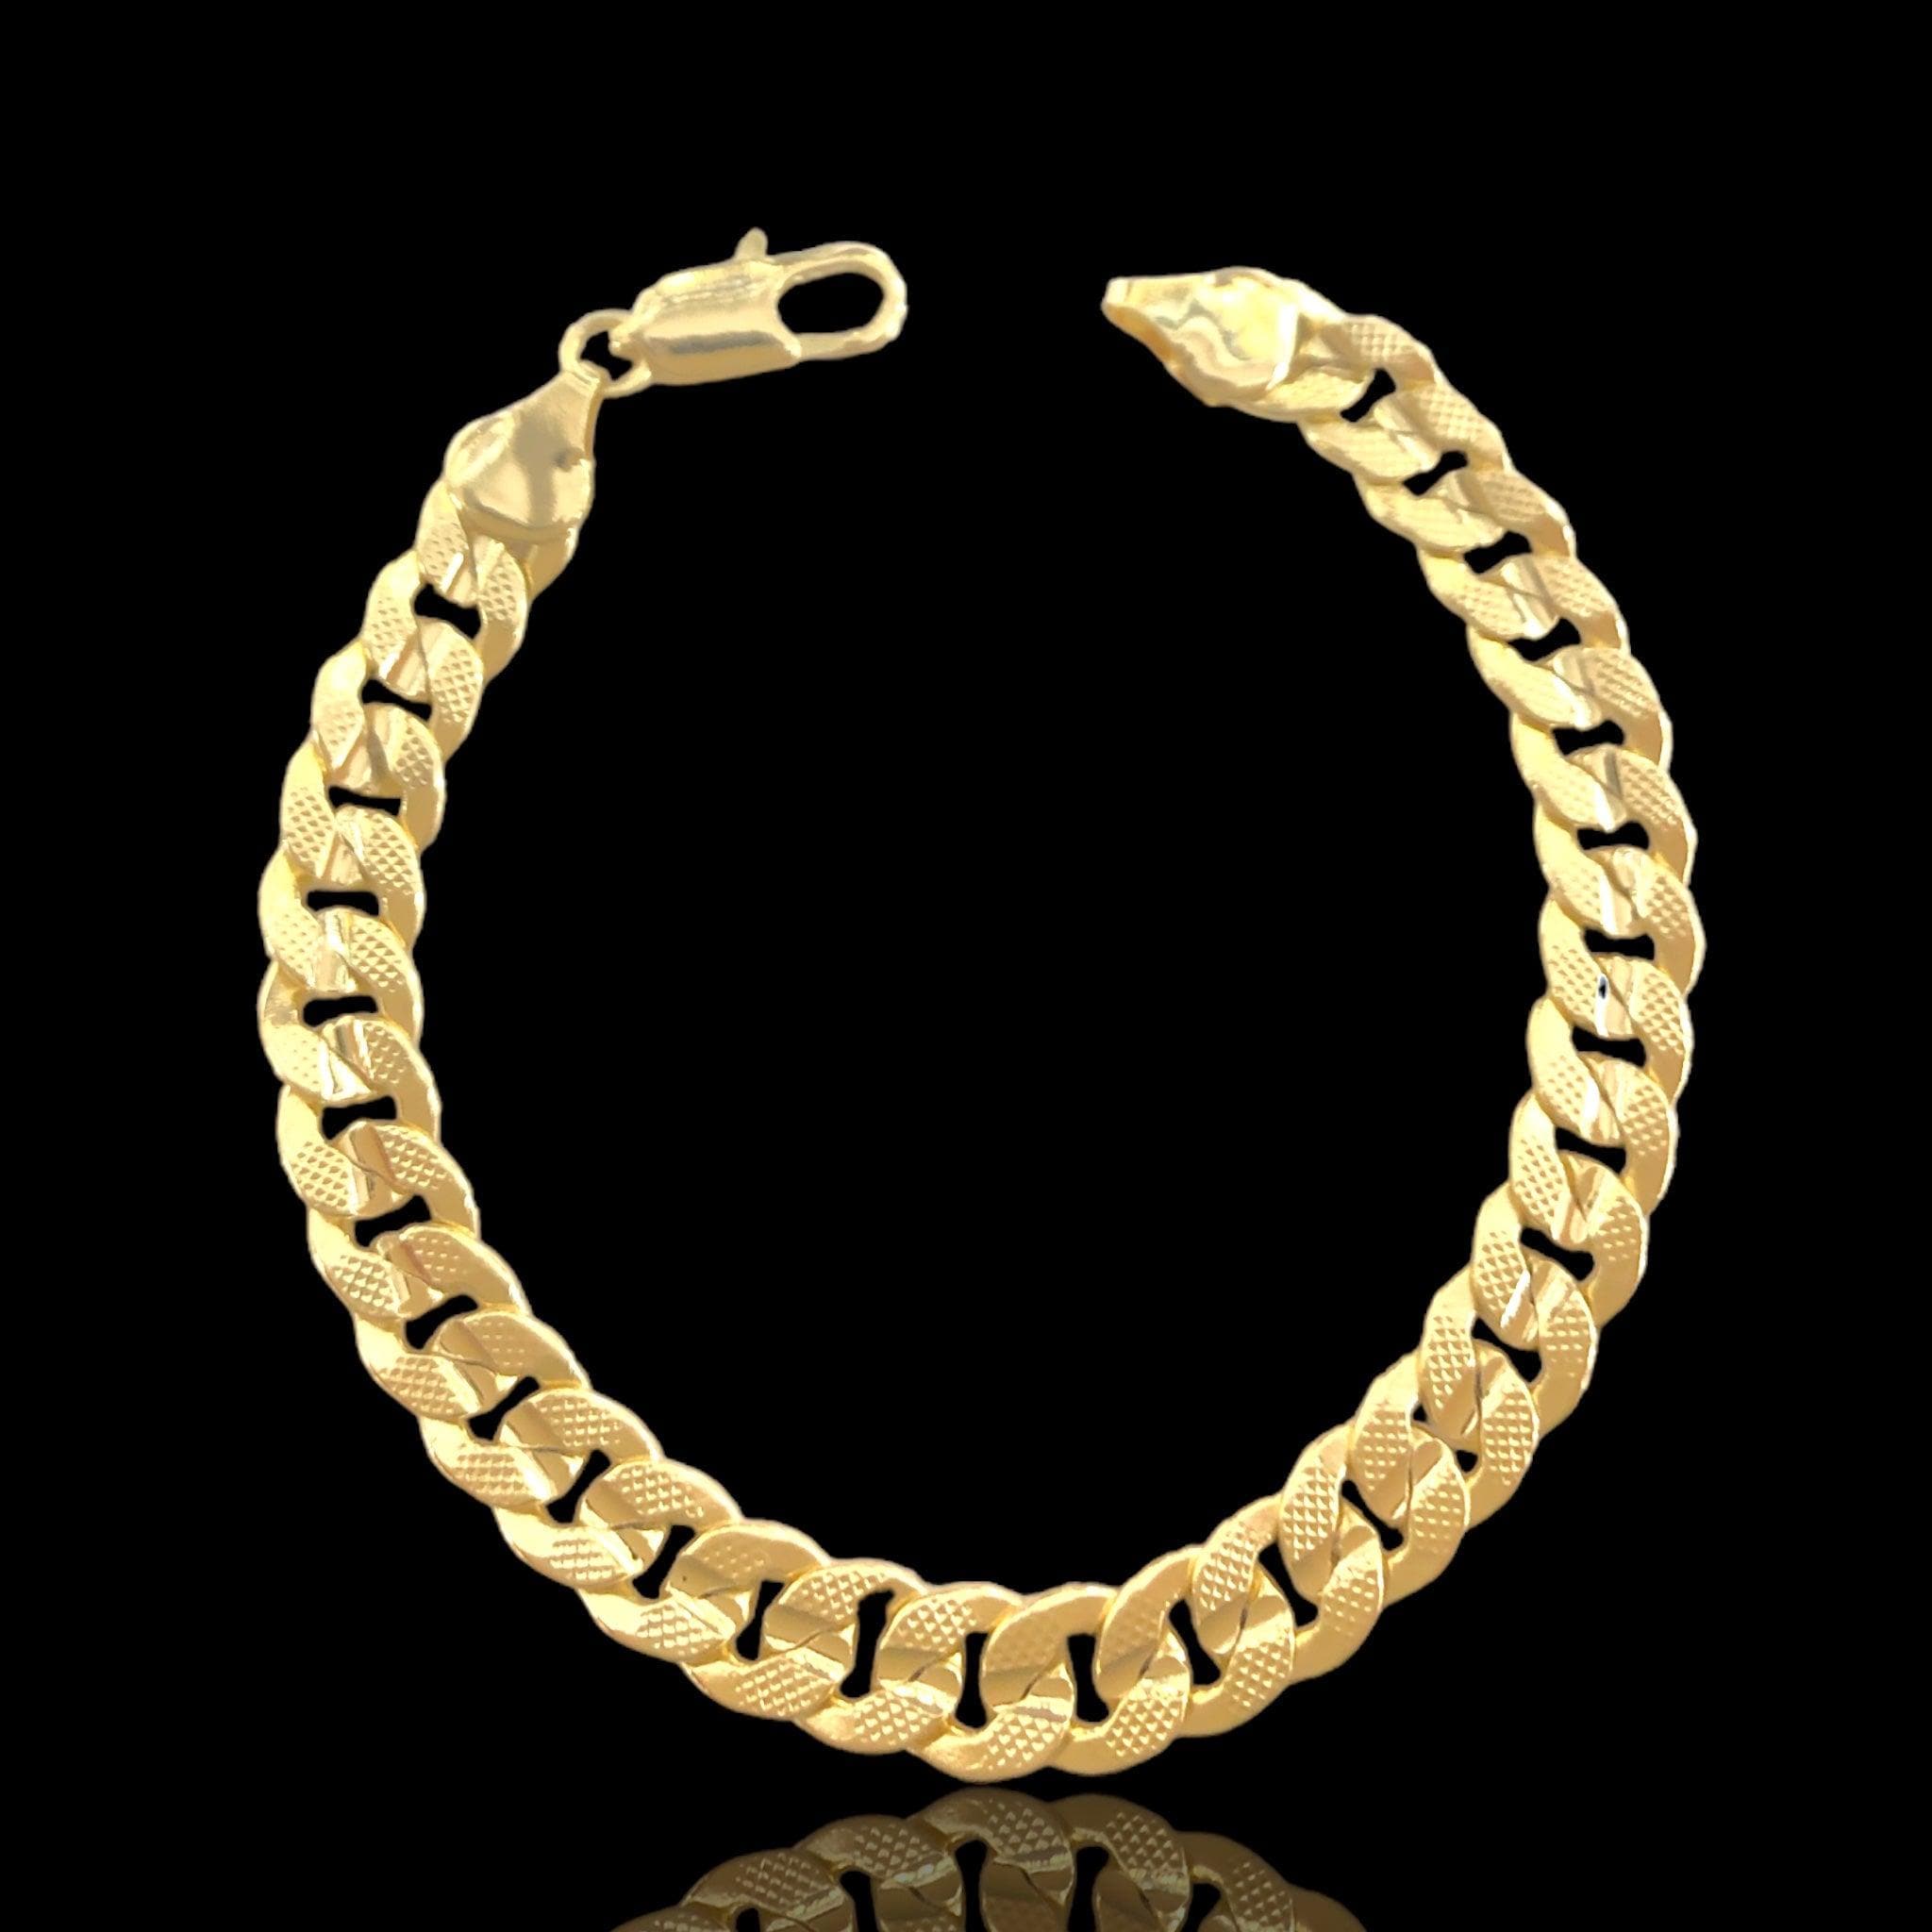 18K Gold-Filled 8.6mm Round Miami Cuban Chain Bracelet -kuania oro laminado